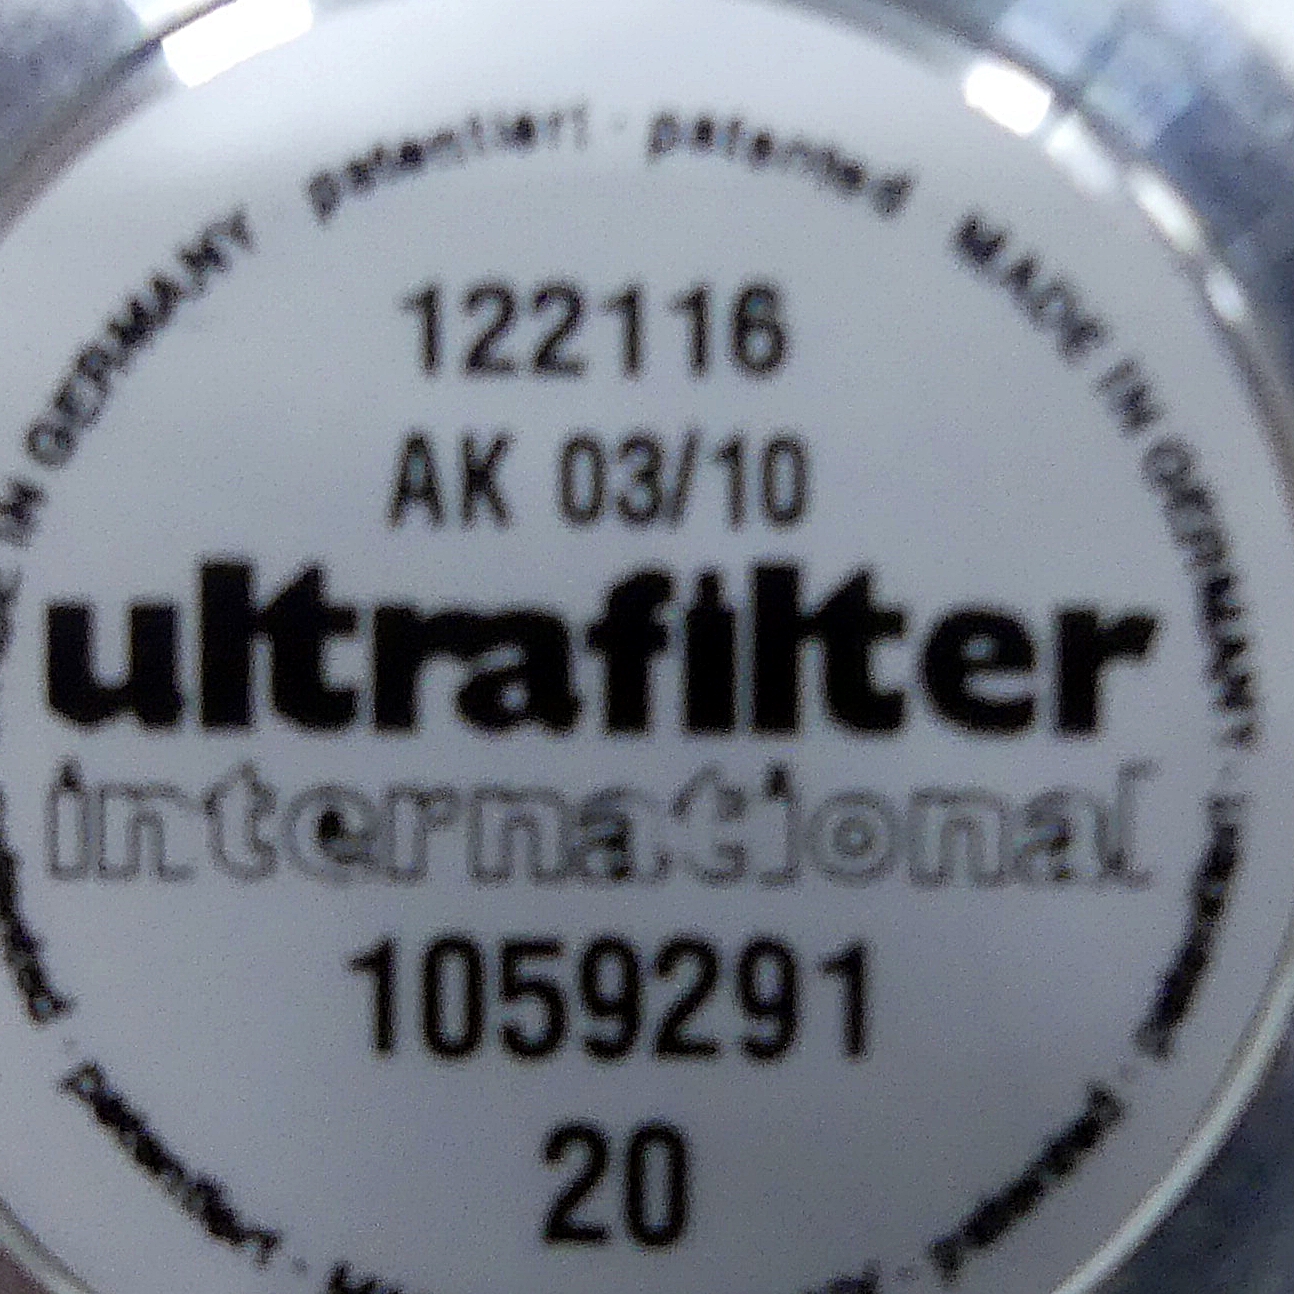 Filter inserts AK 03/10 